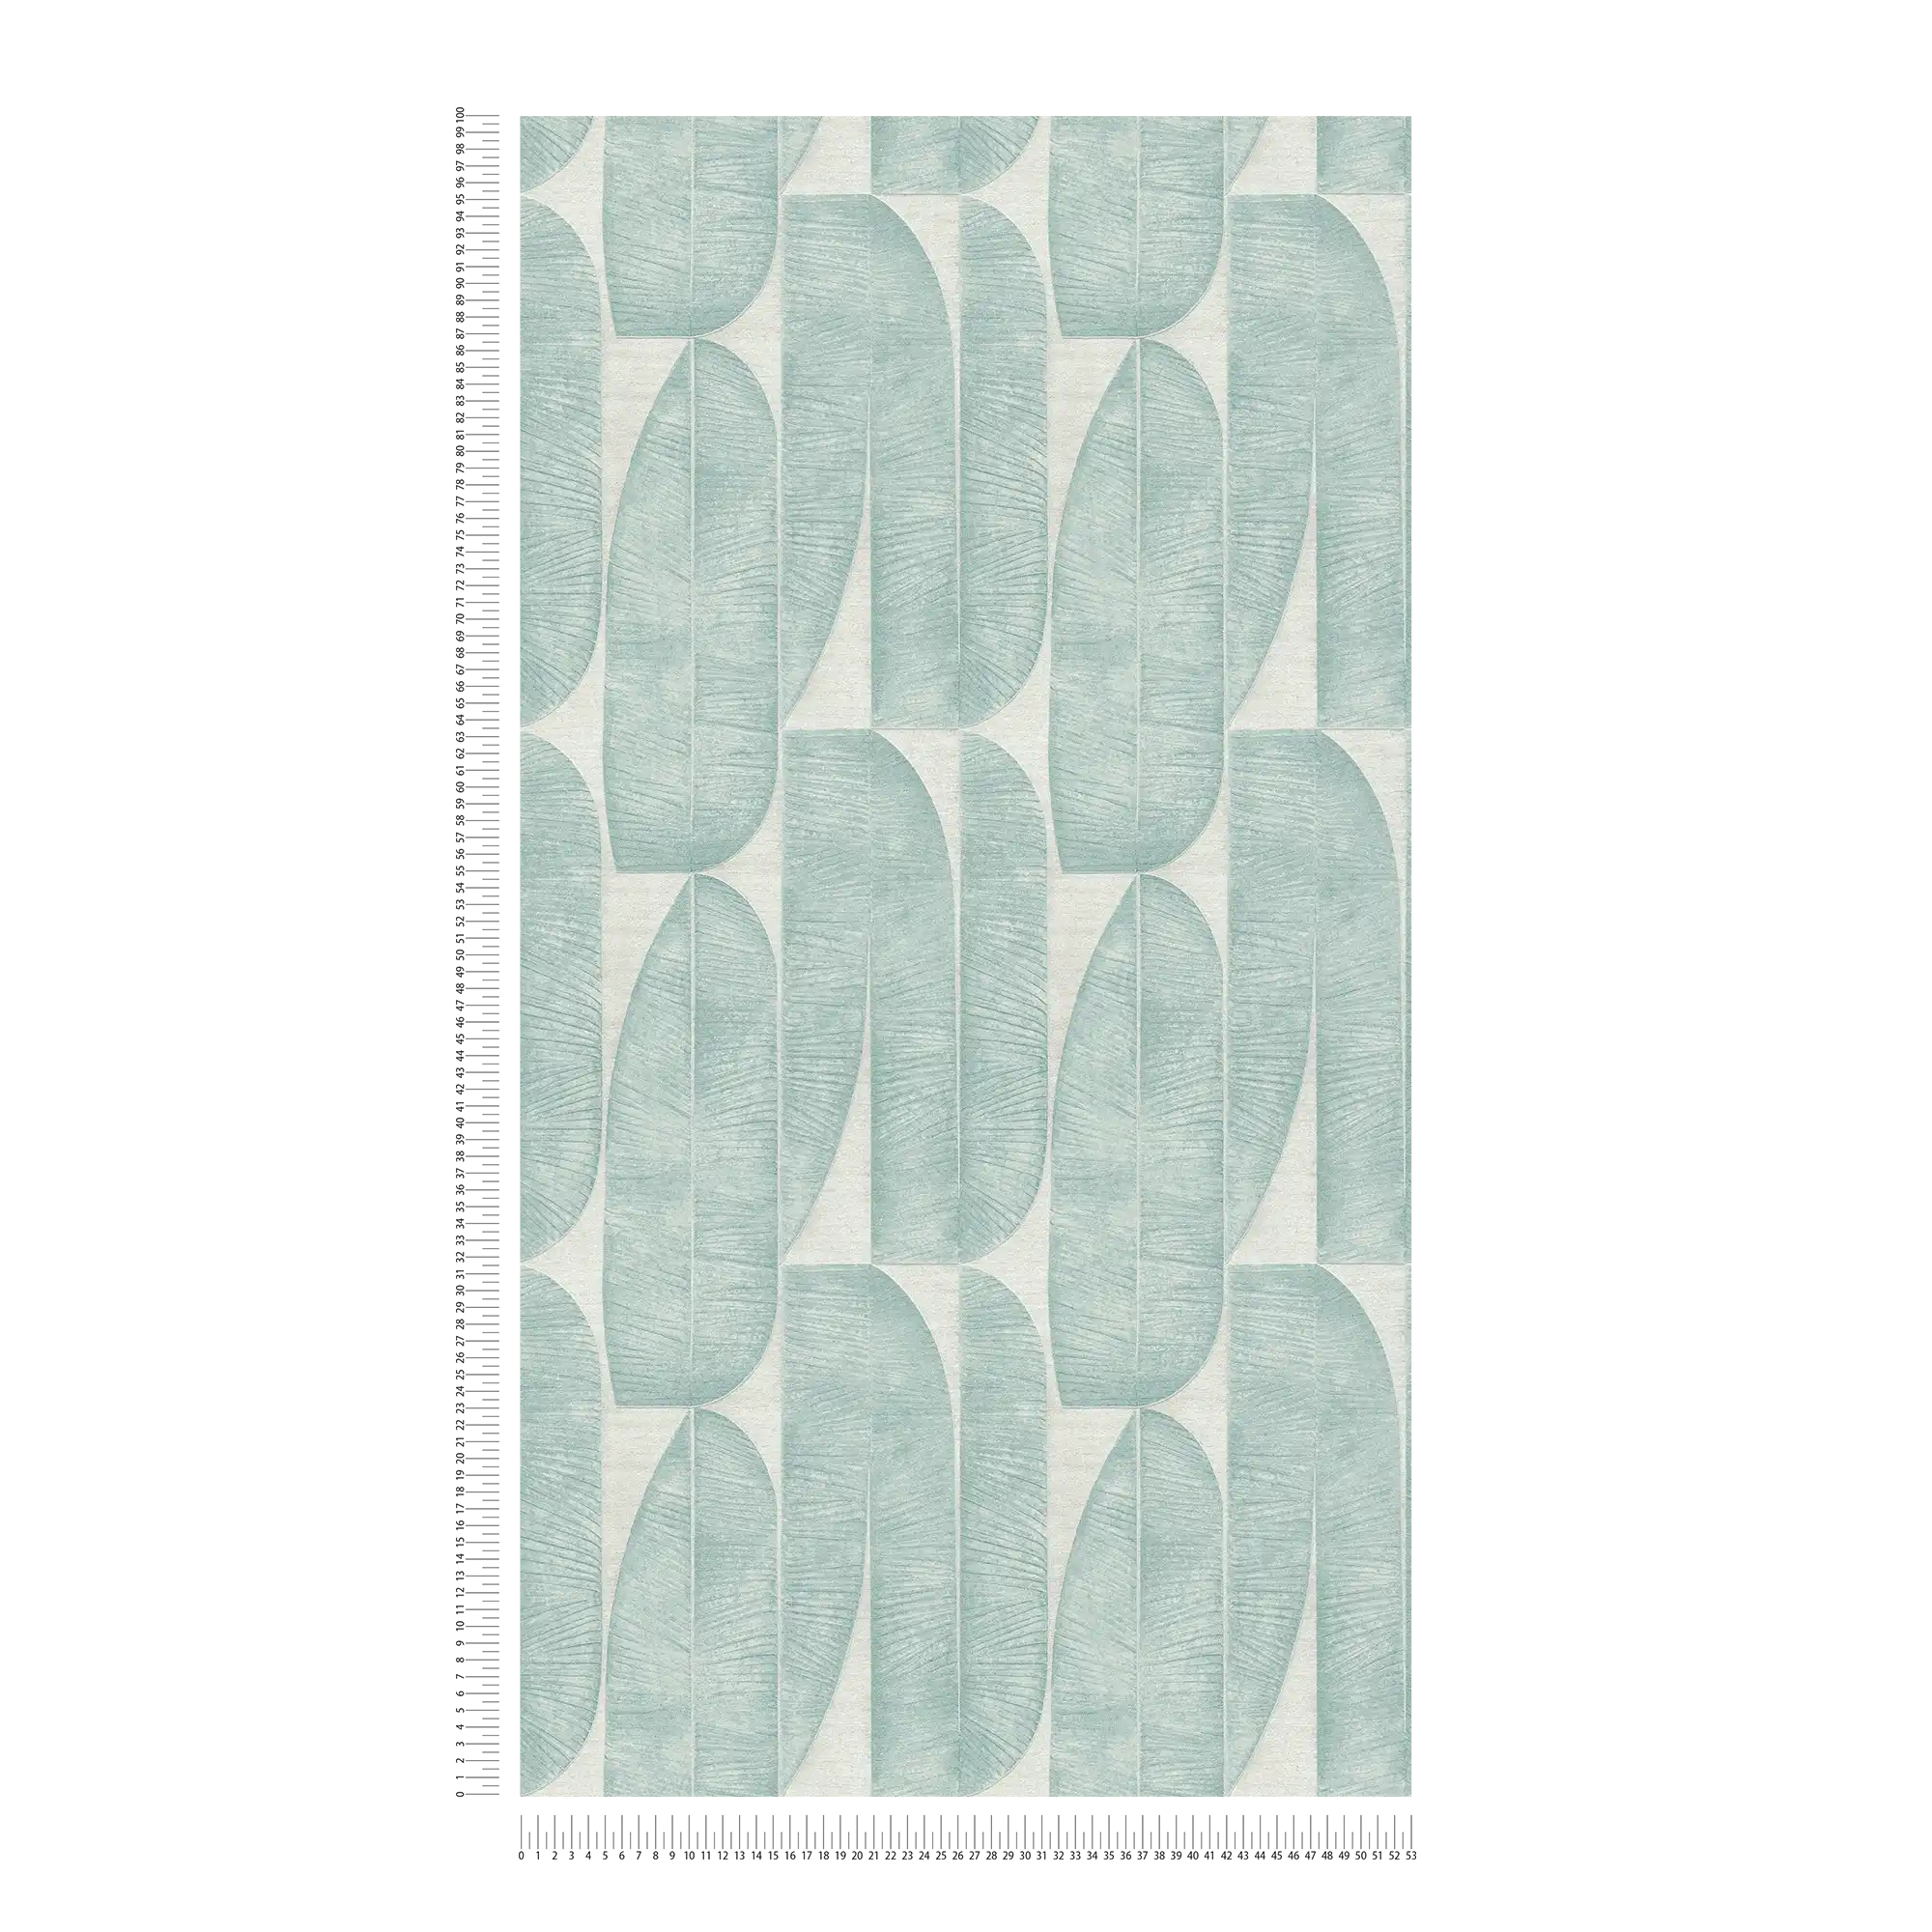             Carta da parati a trama leggera con motivo geometrico a foglie - grigio, blu, turchese
        